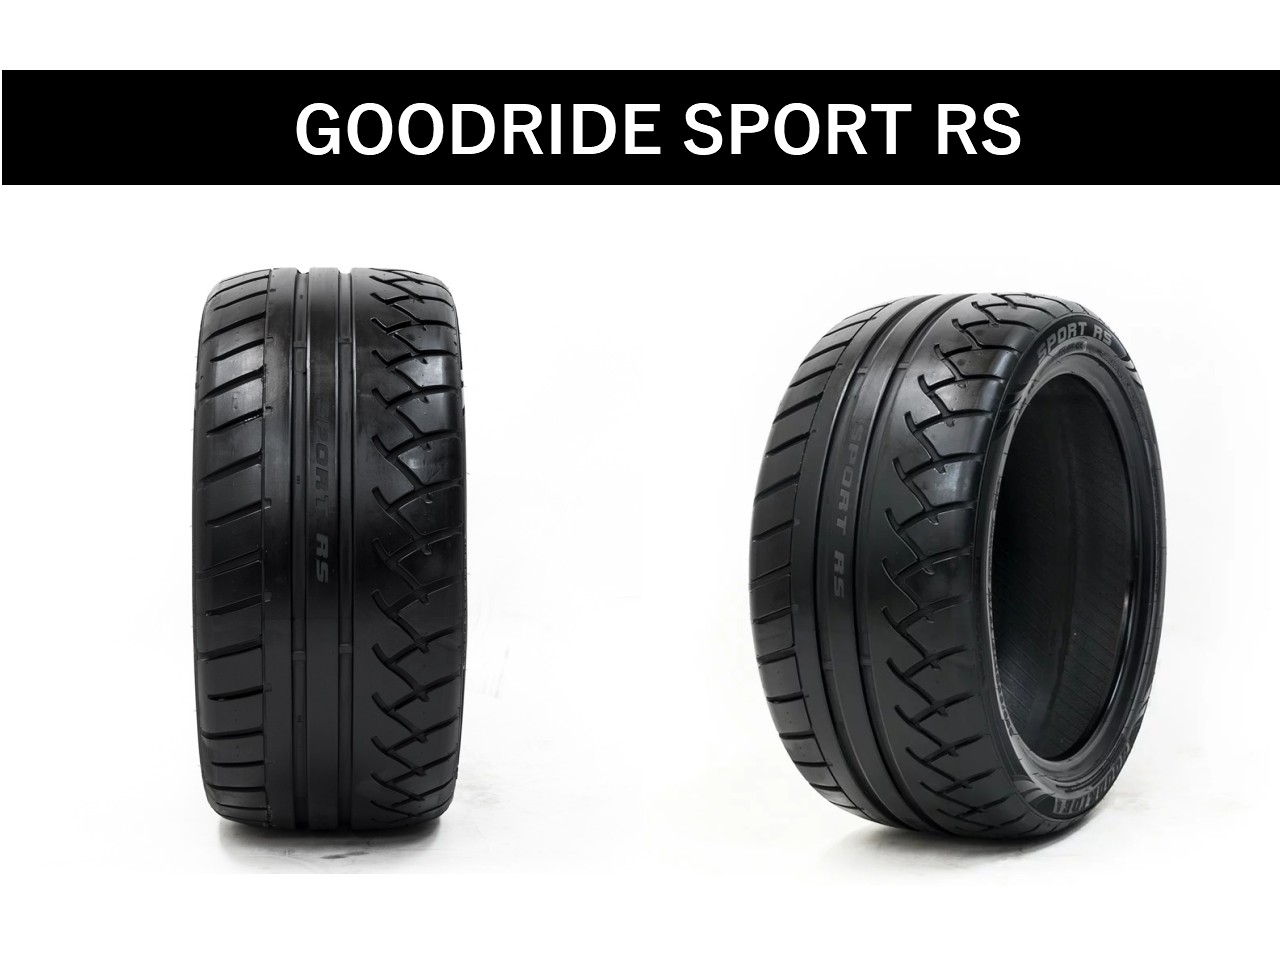 GOODRIDE 「SPORT RS」特徴とおすすめ度 | 履き倒せアジアンハイグリップタイヤ